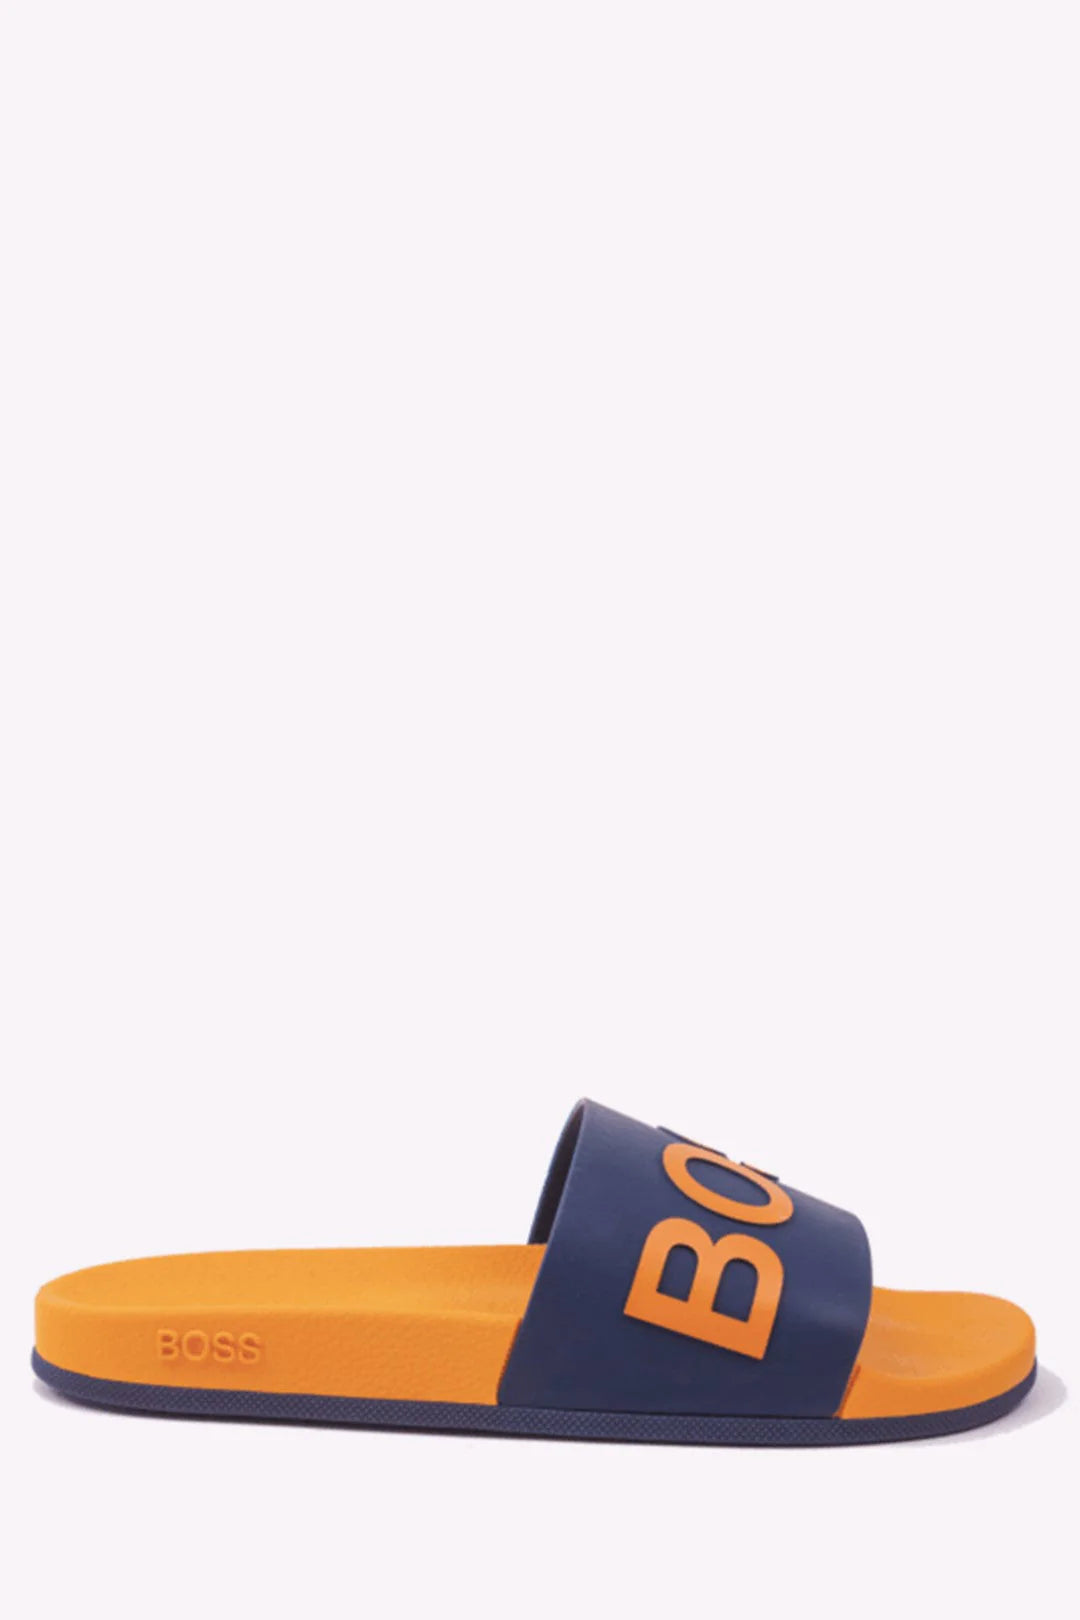 Sandale Hugo Boss de couleur Marine/Orange